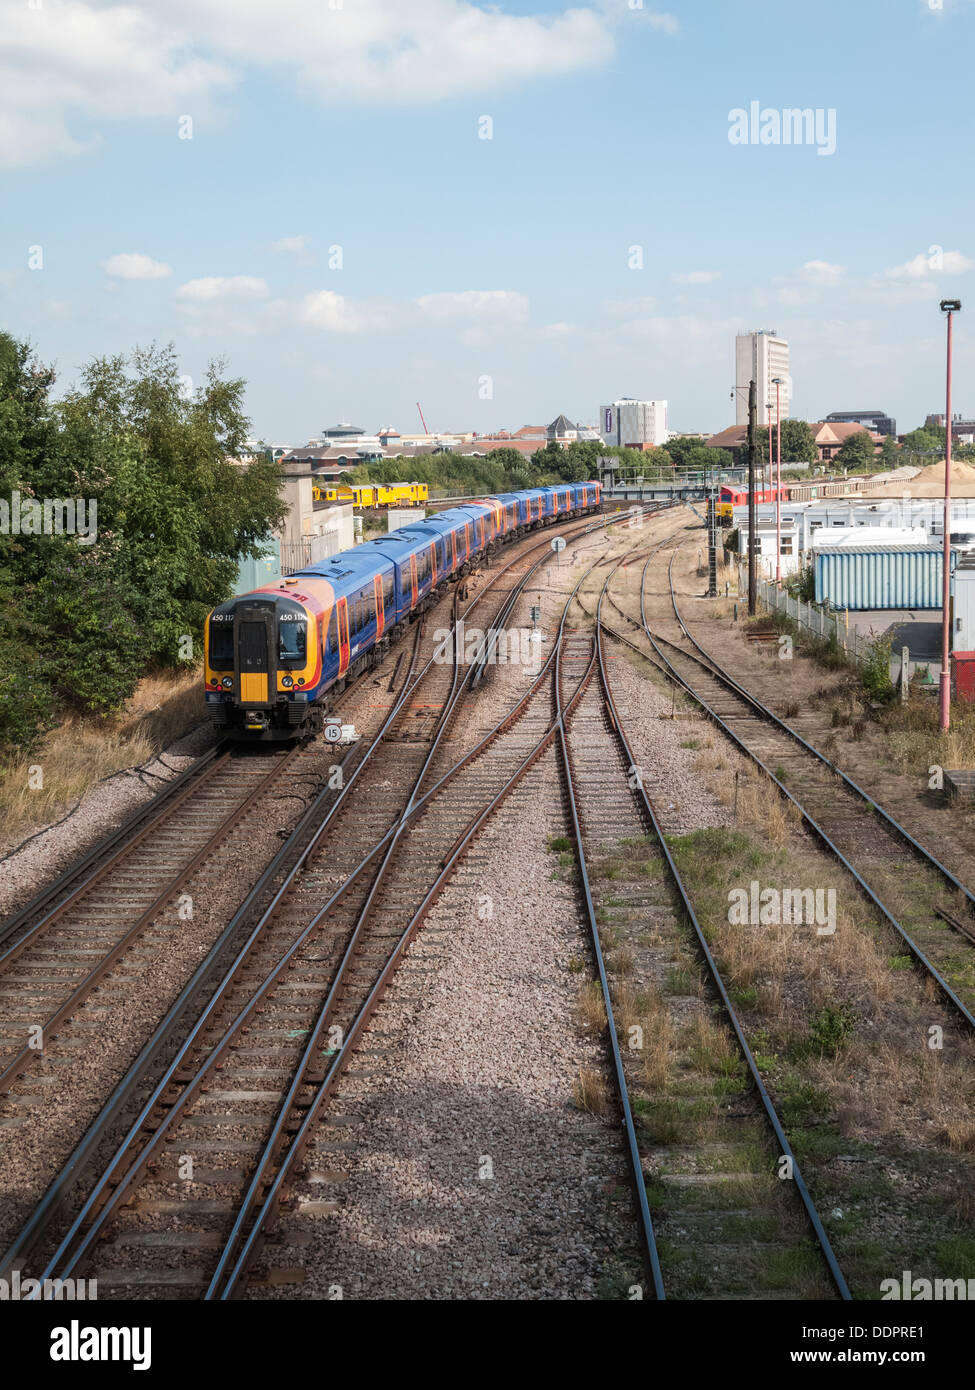 Railway tracks leading towards Woking, Surrey, England with South West Trains passenger train approaching Woking station Stock Photo